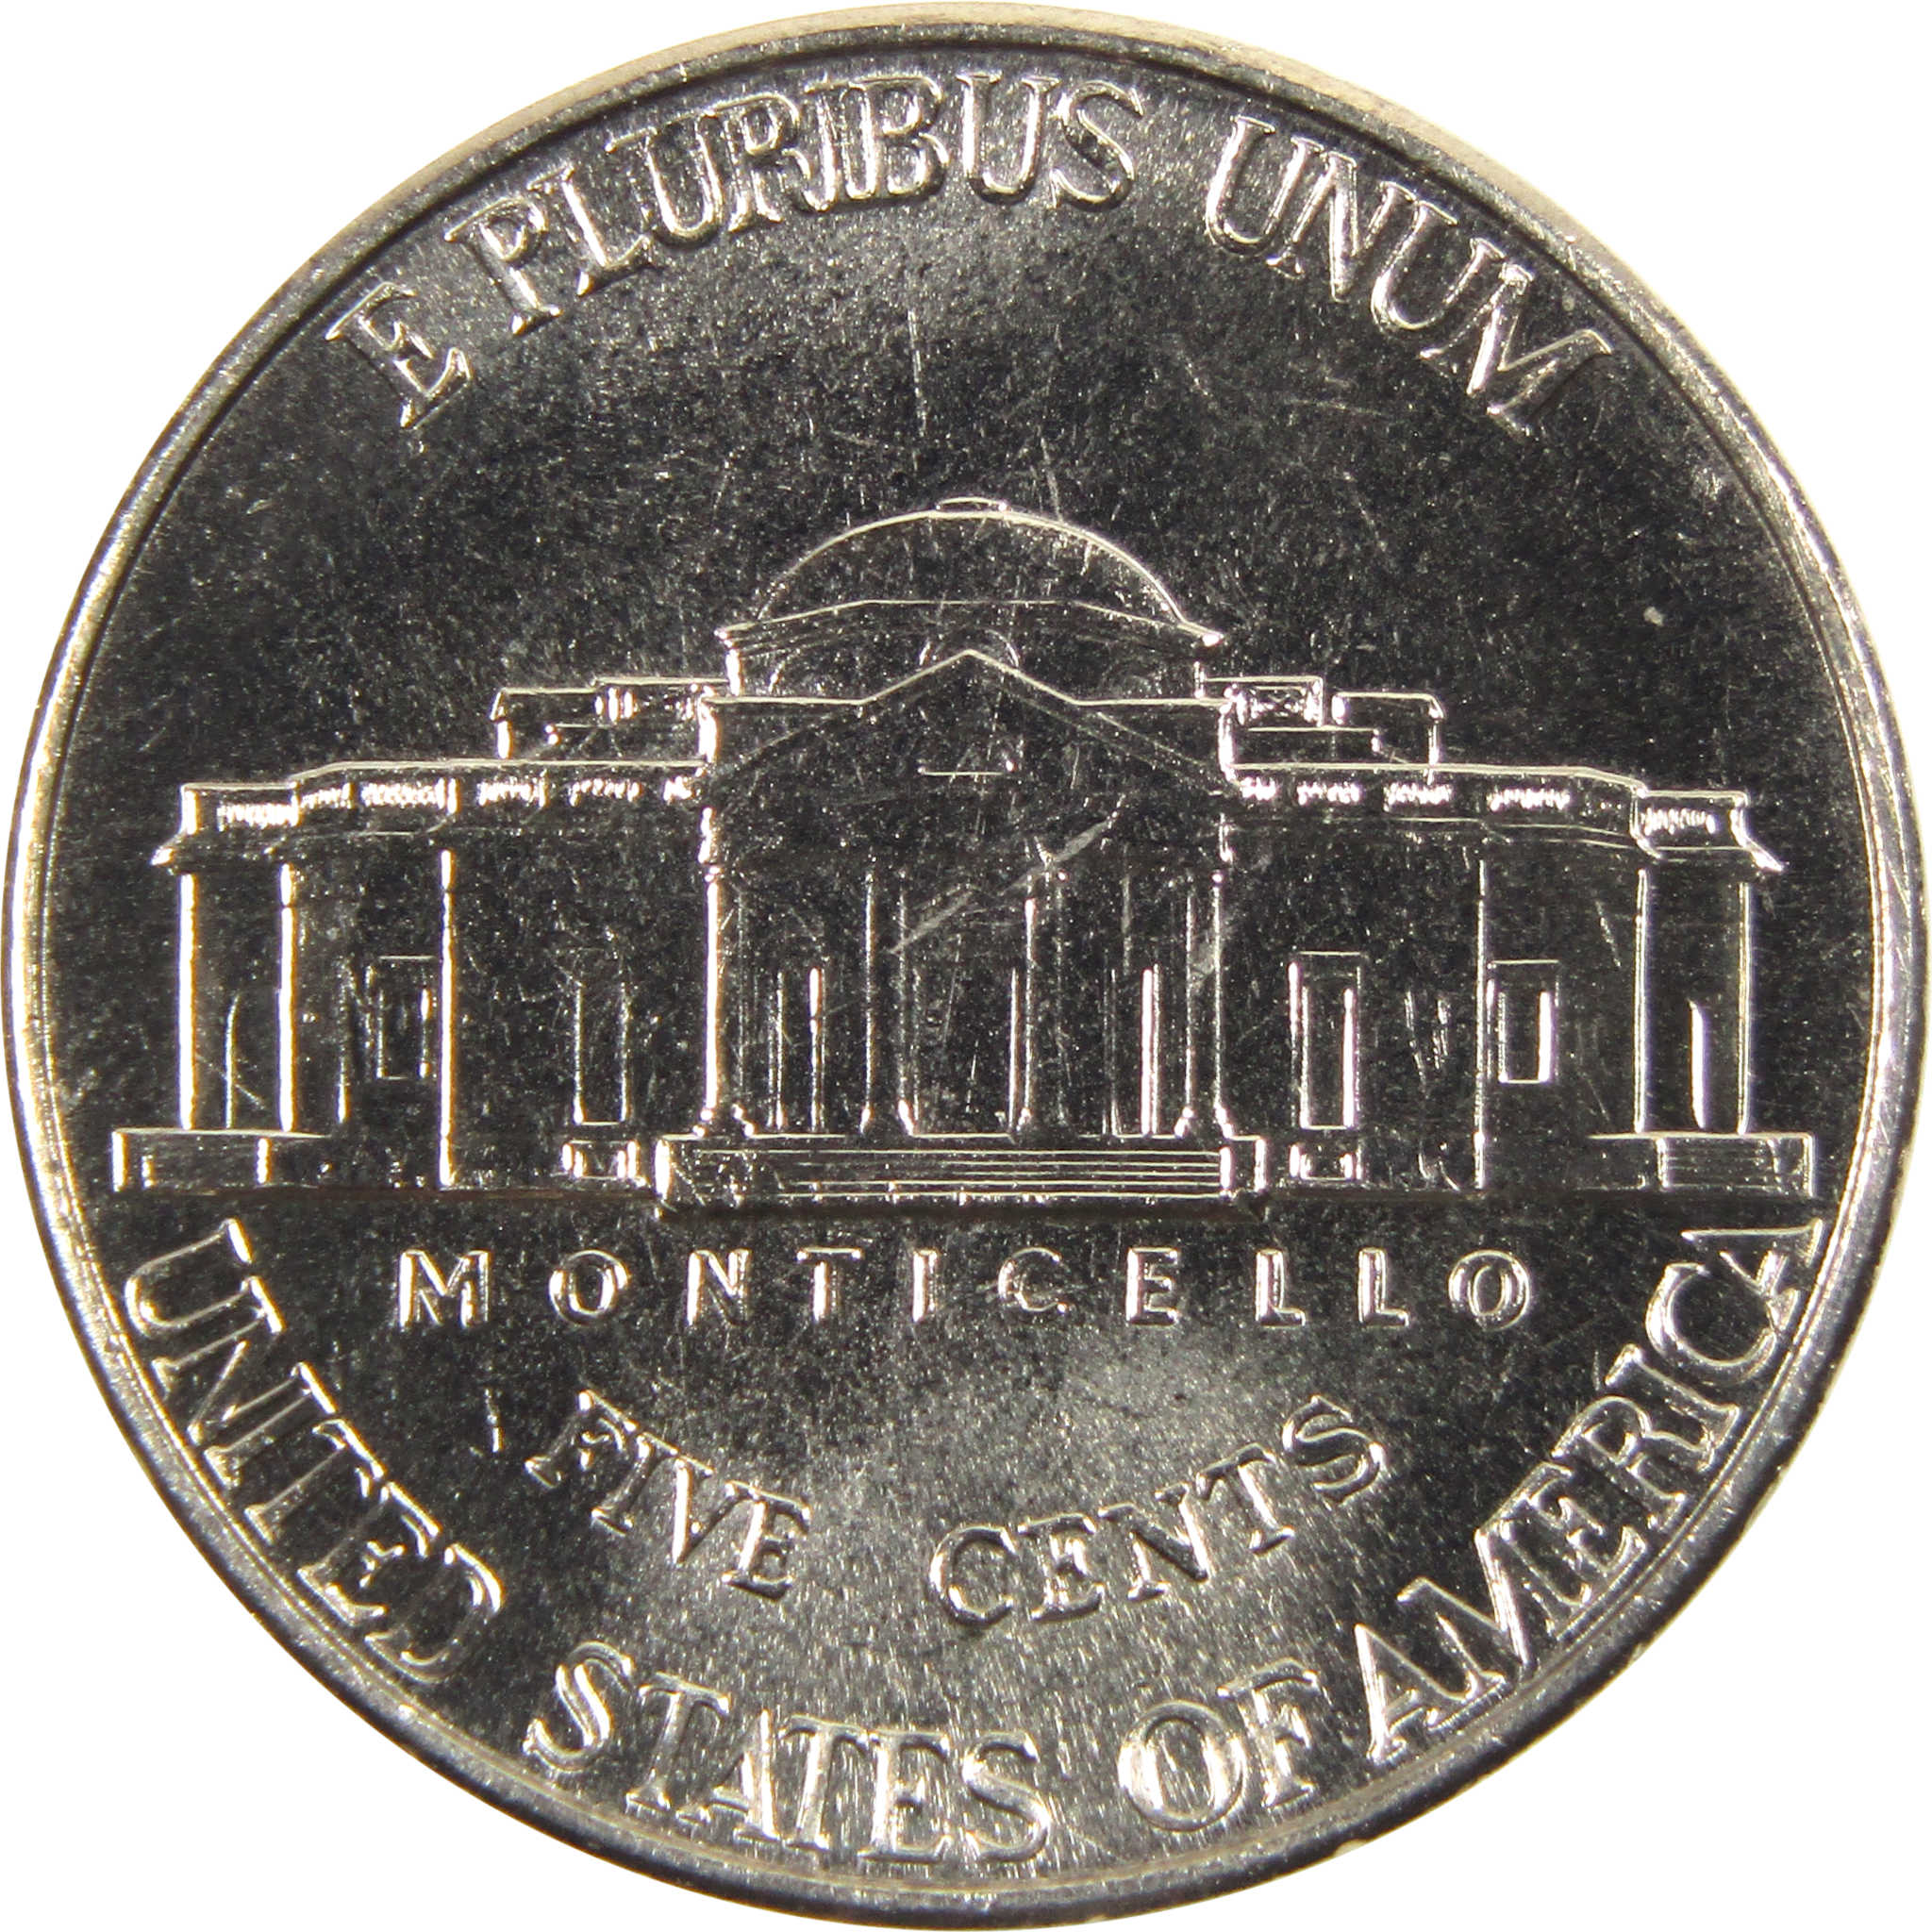 1999 D Jefferson Nickel BU Uncirculated 5c Coin